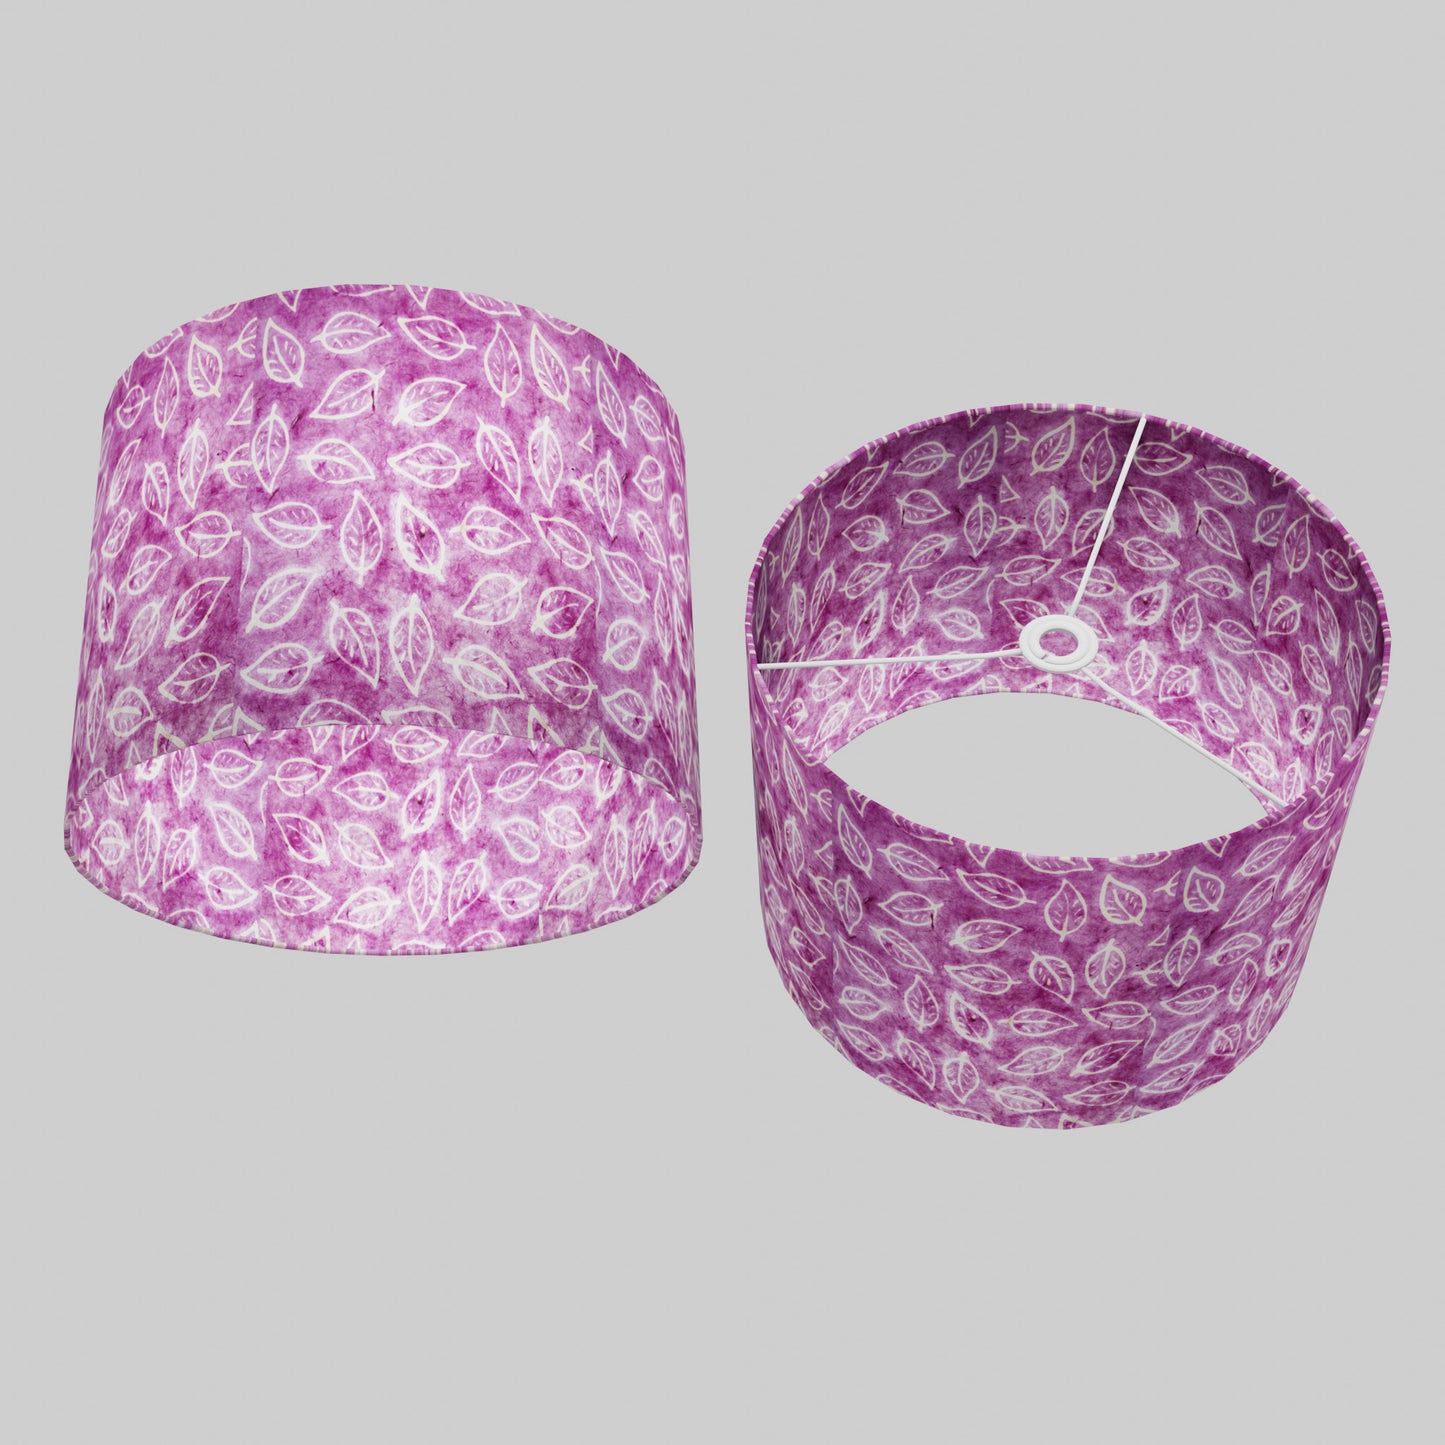 Drum Lamp Shade - P68 - Batik Leaf on Purple, 40cm(d) x 30cm(h)